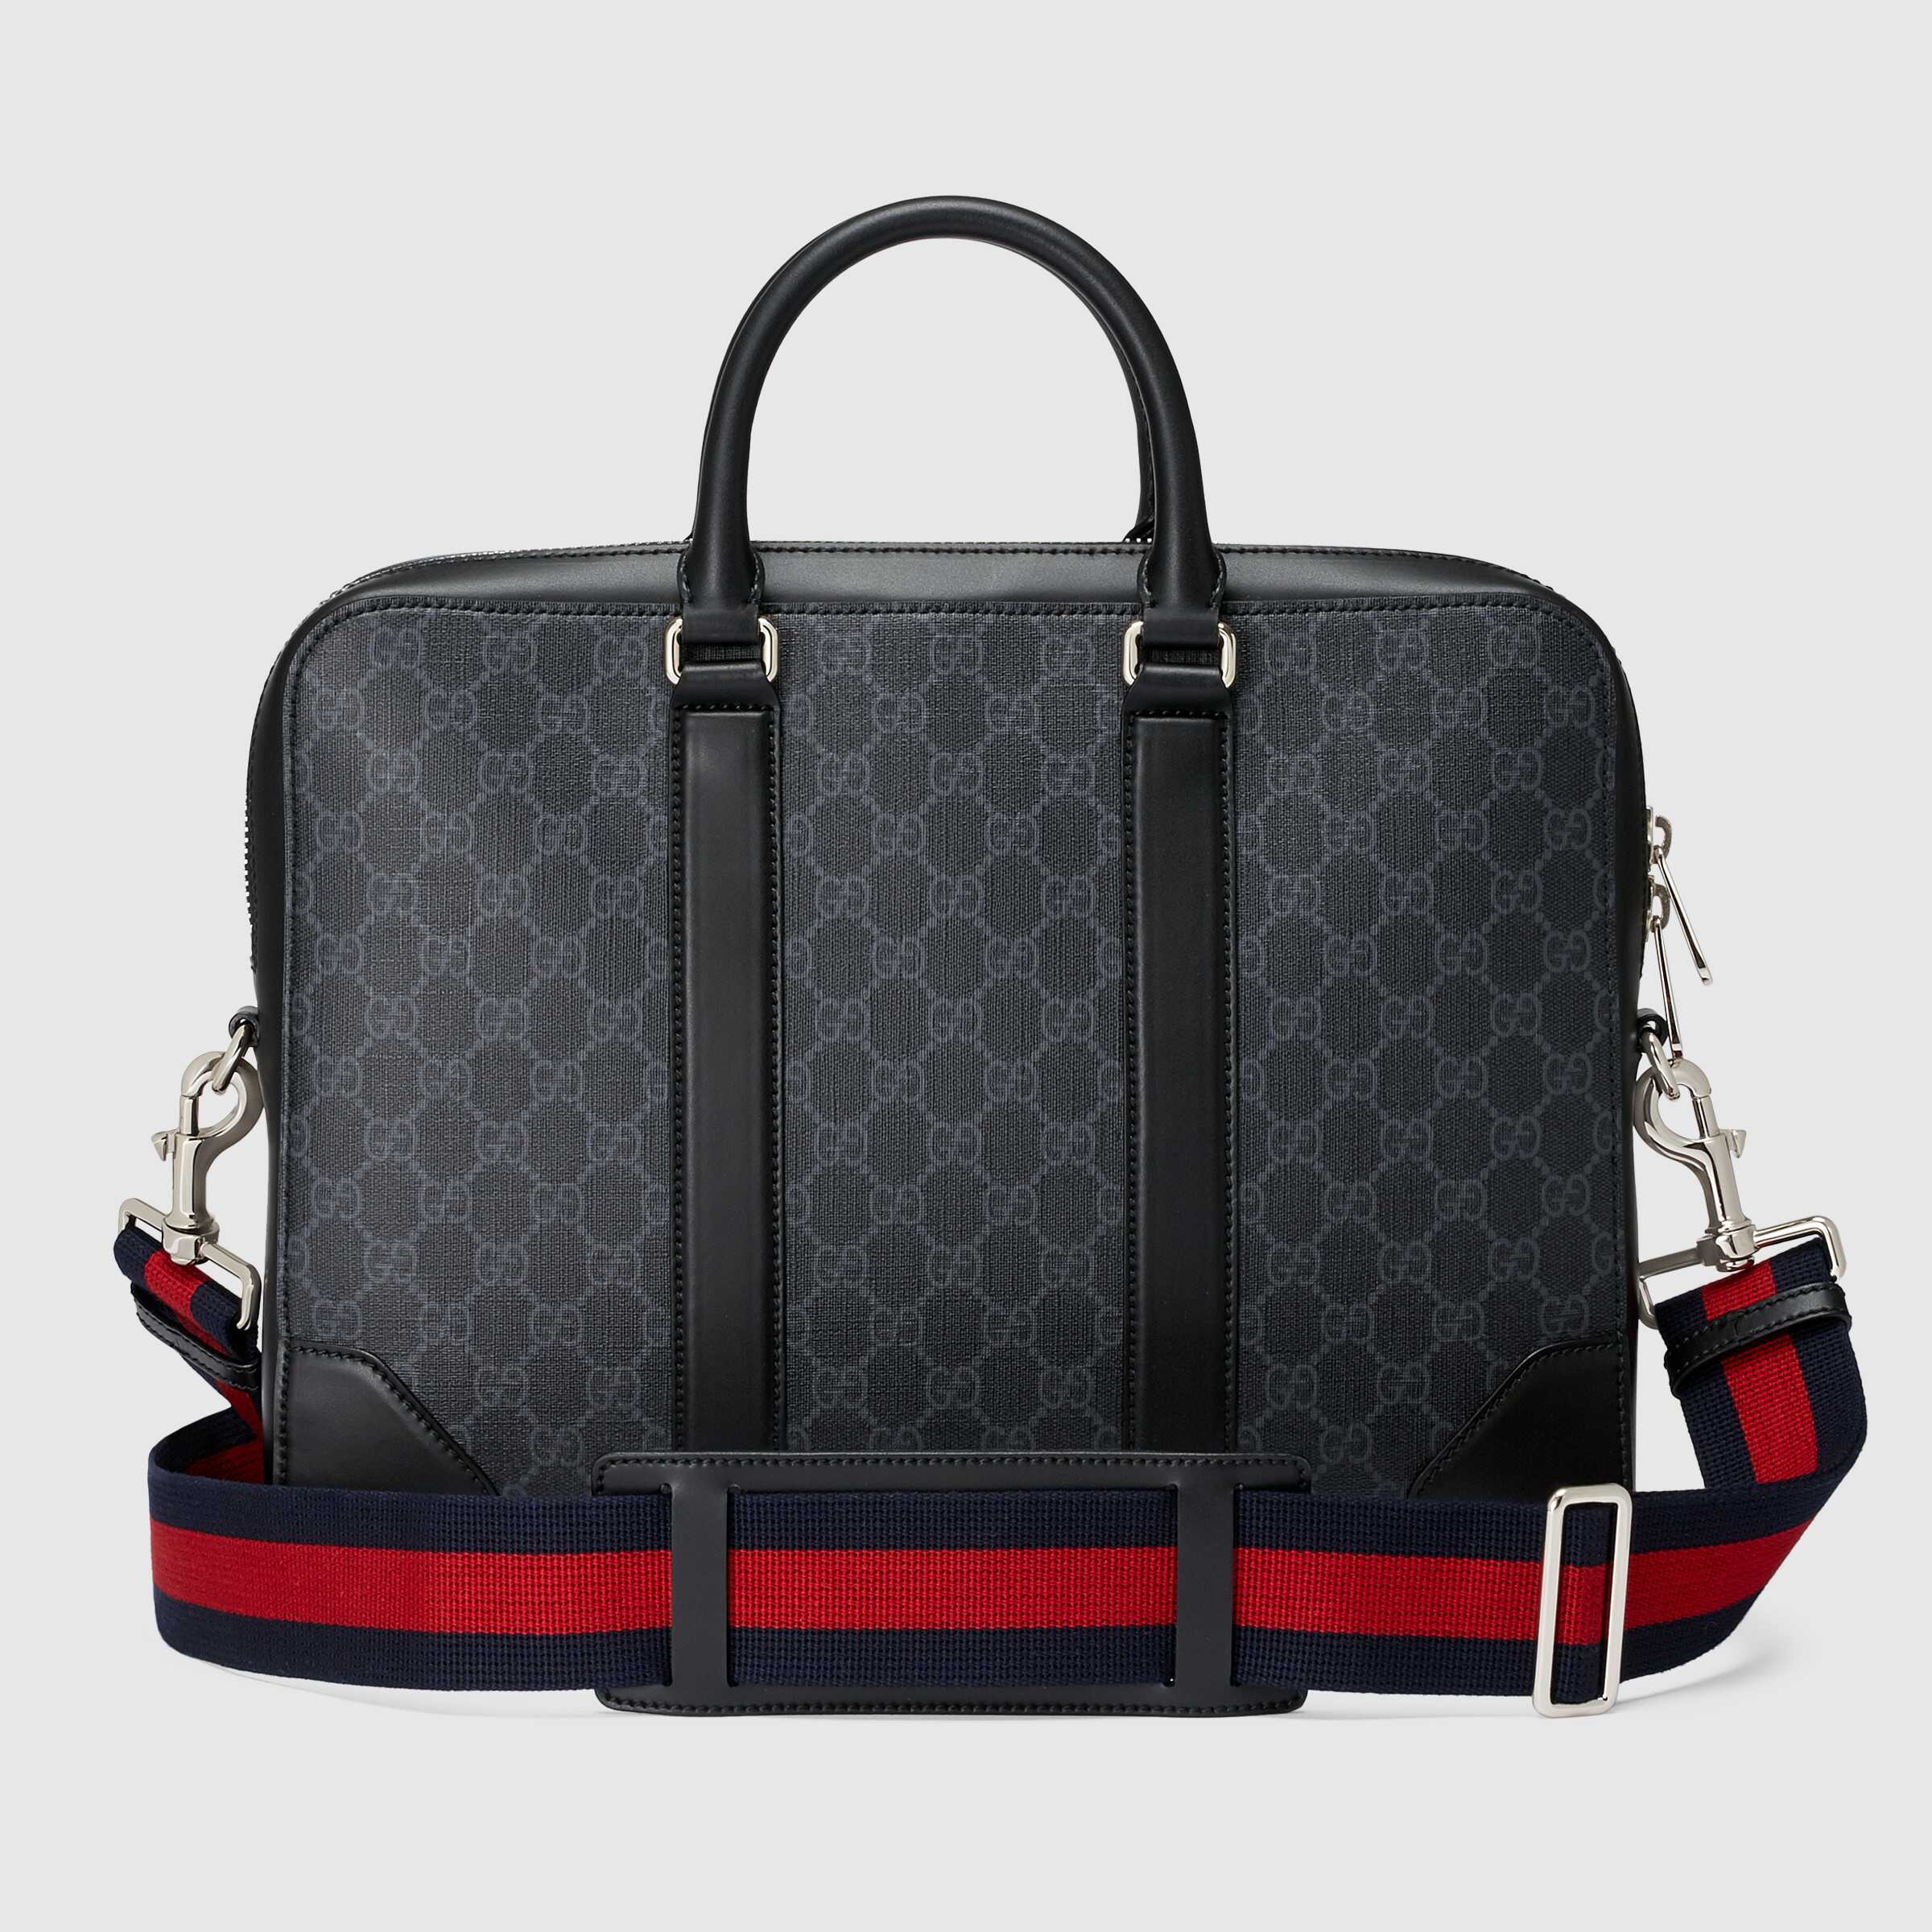 Gucci GG Supreme Briefcase Black/Grey Canvas